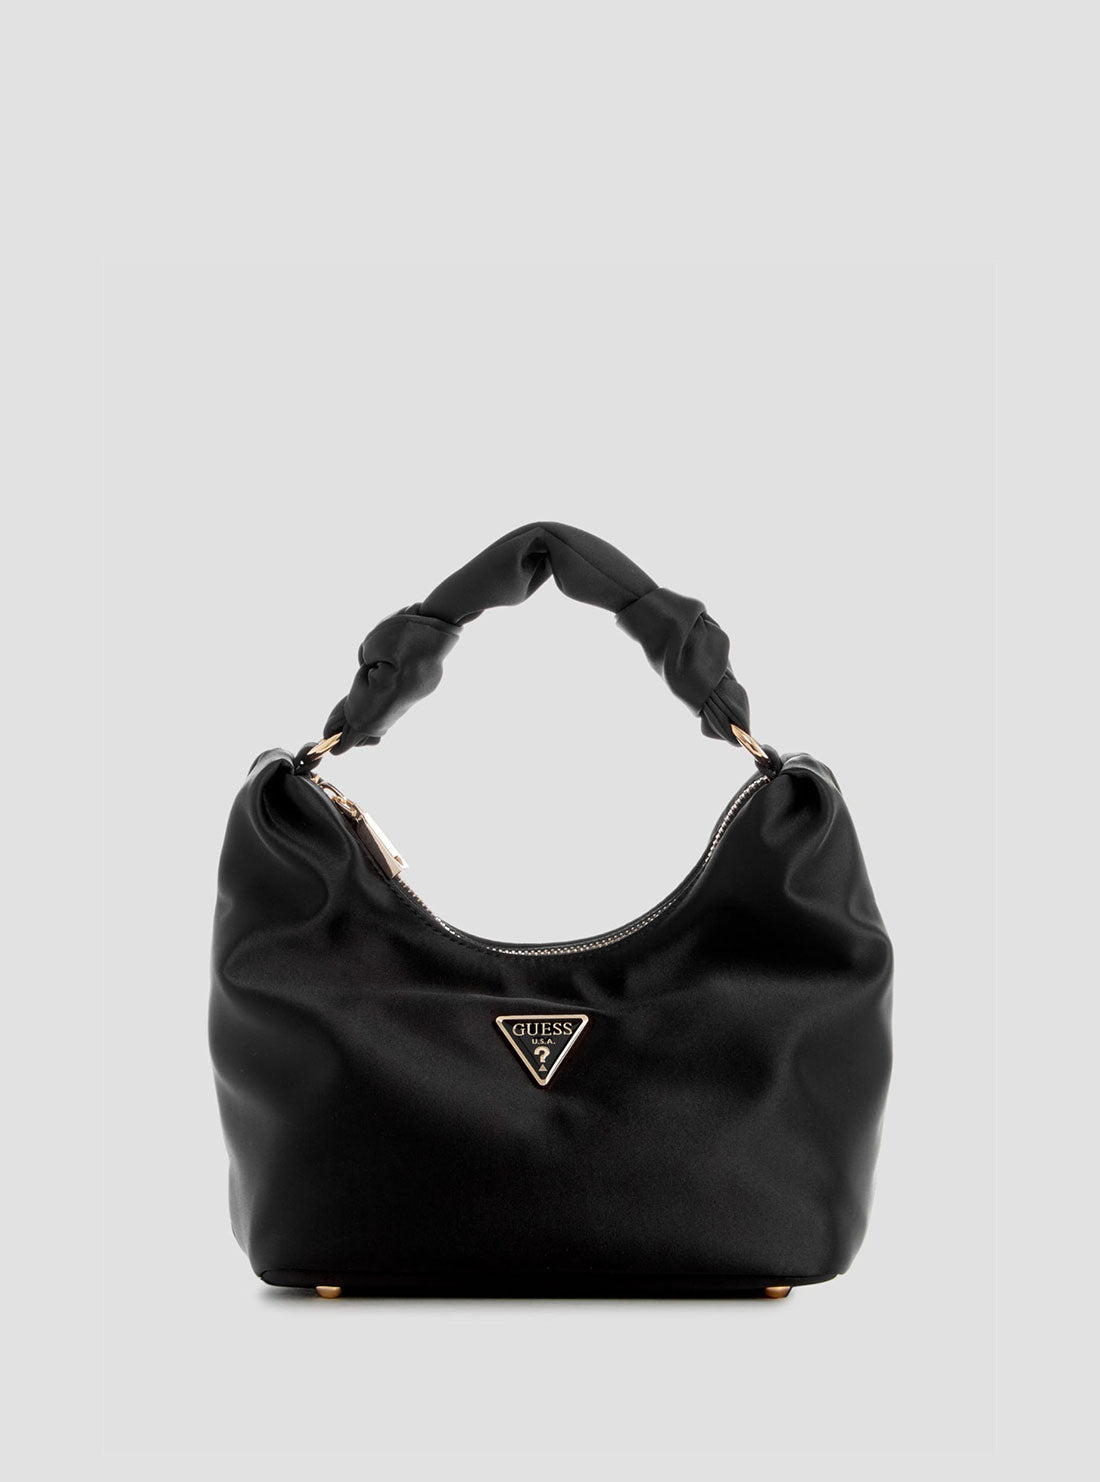 GUESS Women's Black Velina Hobo Bag EG876502 Front View